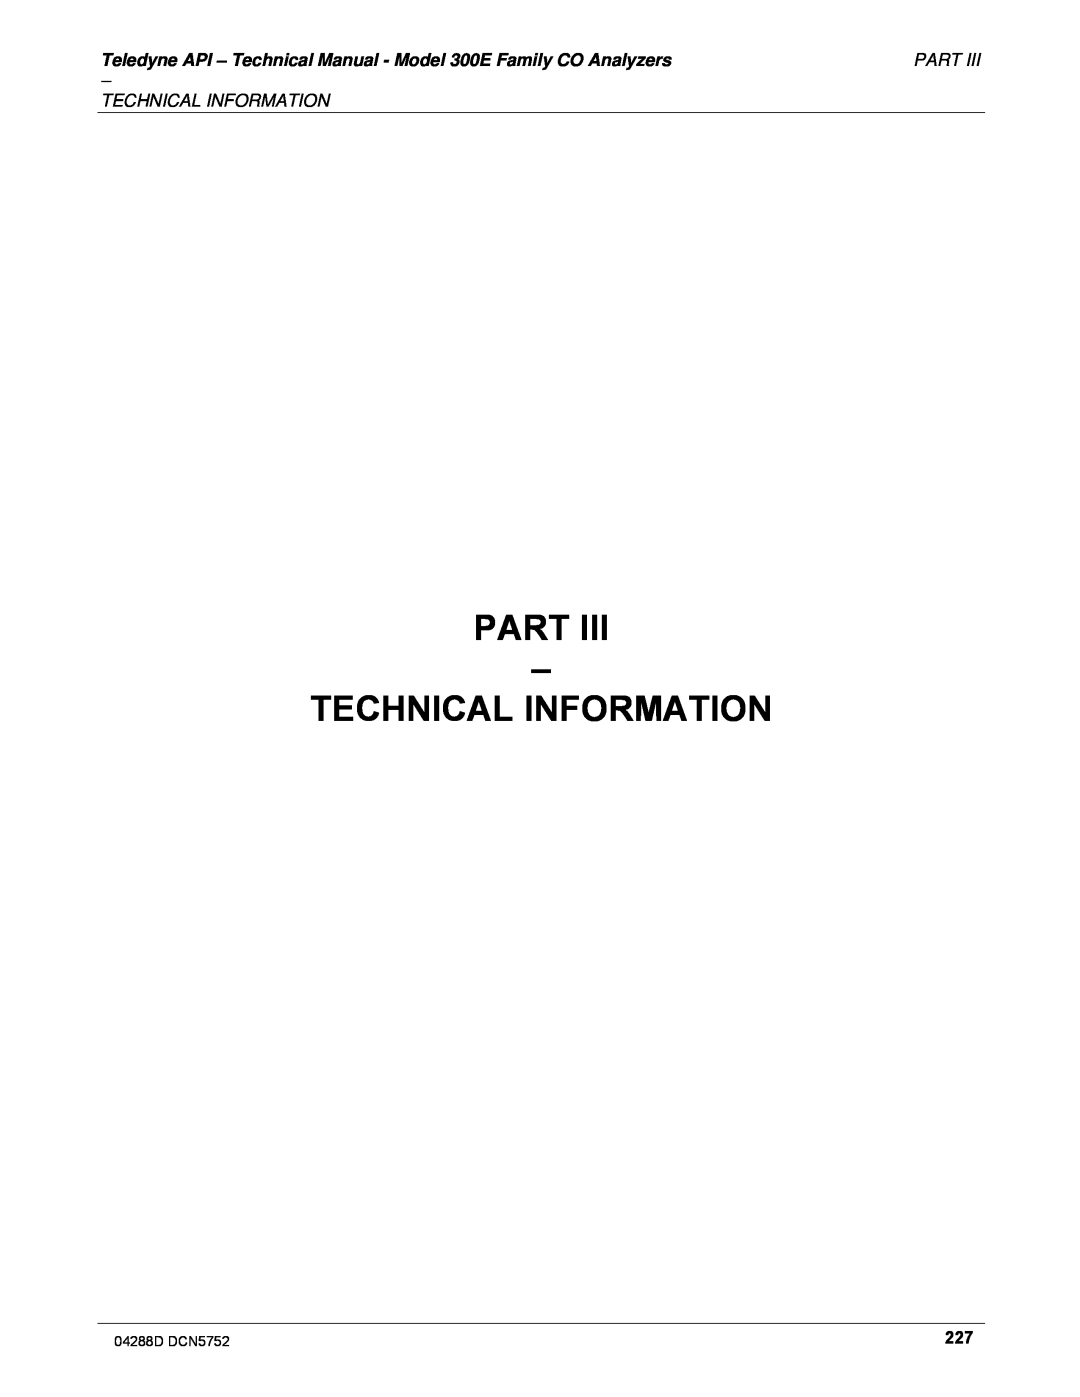 Teledyne M300EM operation manual Part – Technical Information 